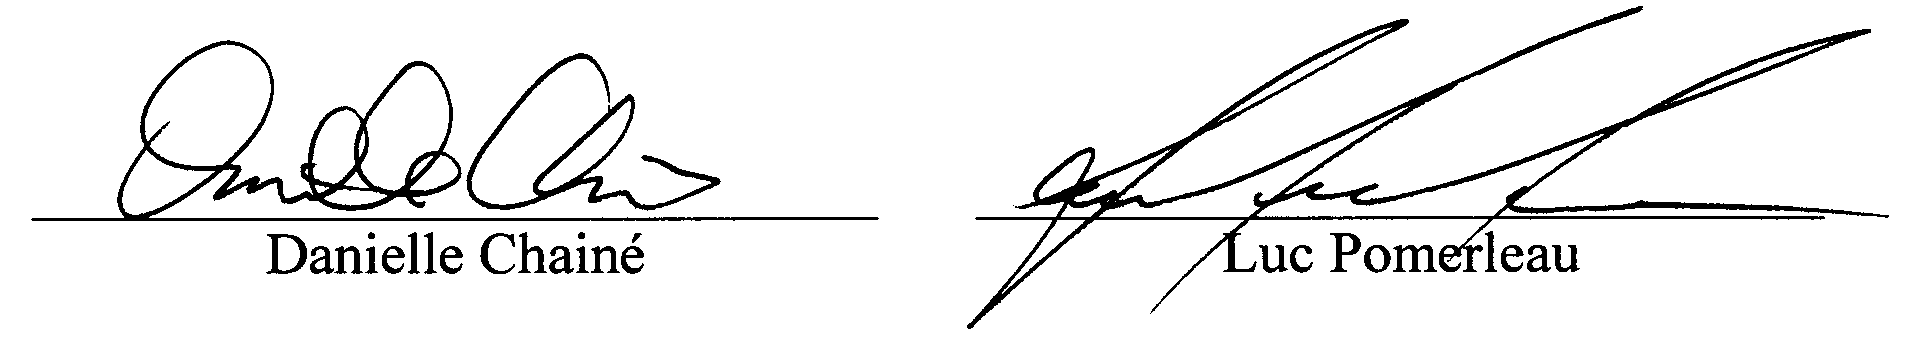 Signature Page - Appendix "B" - TR Agreement